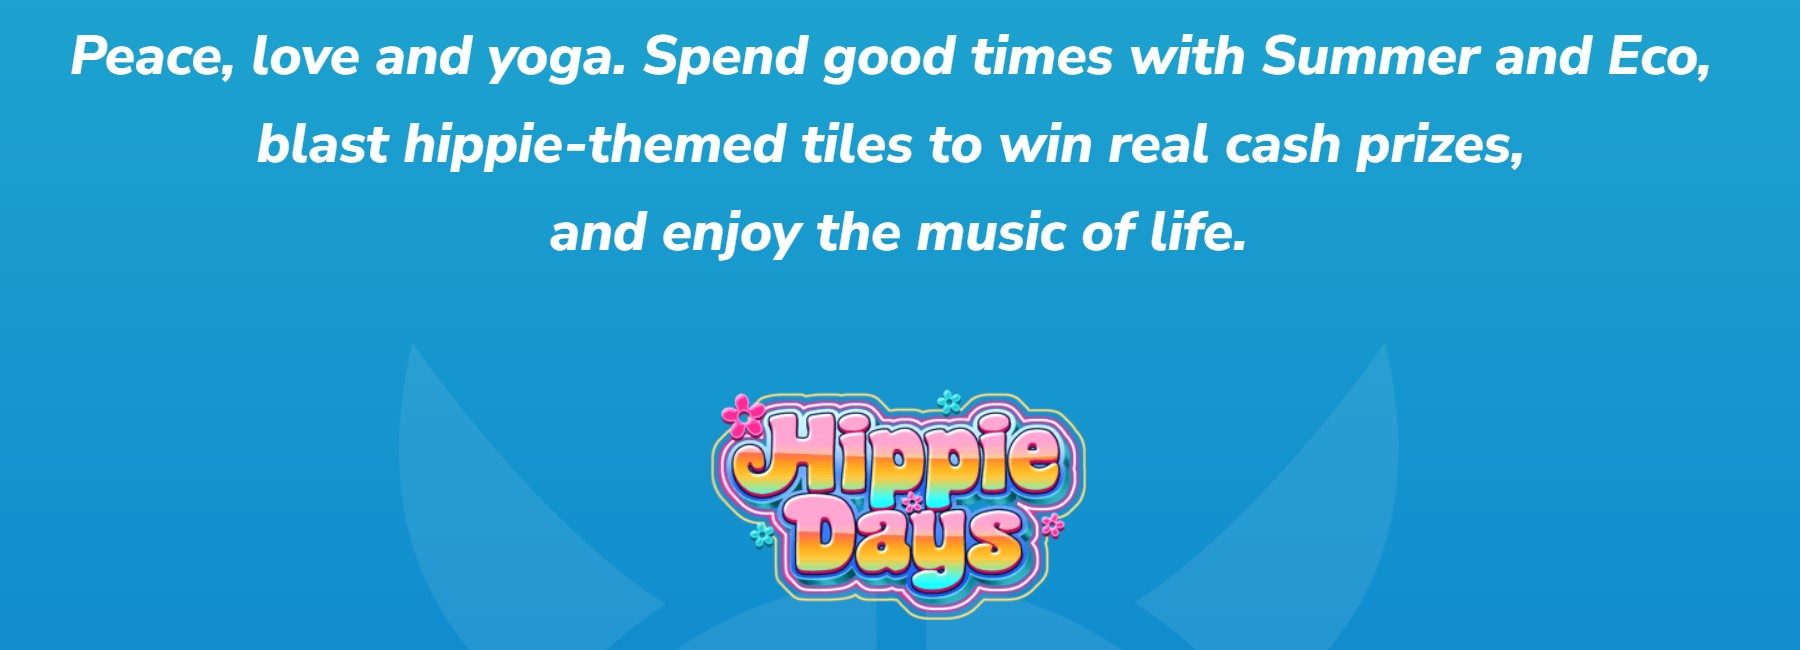 Pangkalahatang-ideya ng Hippie Days